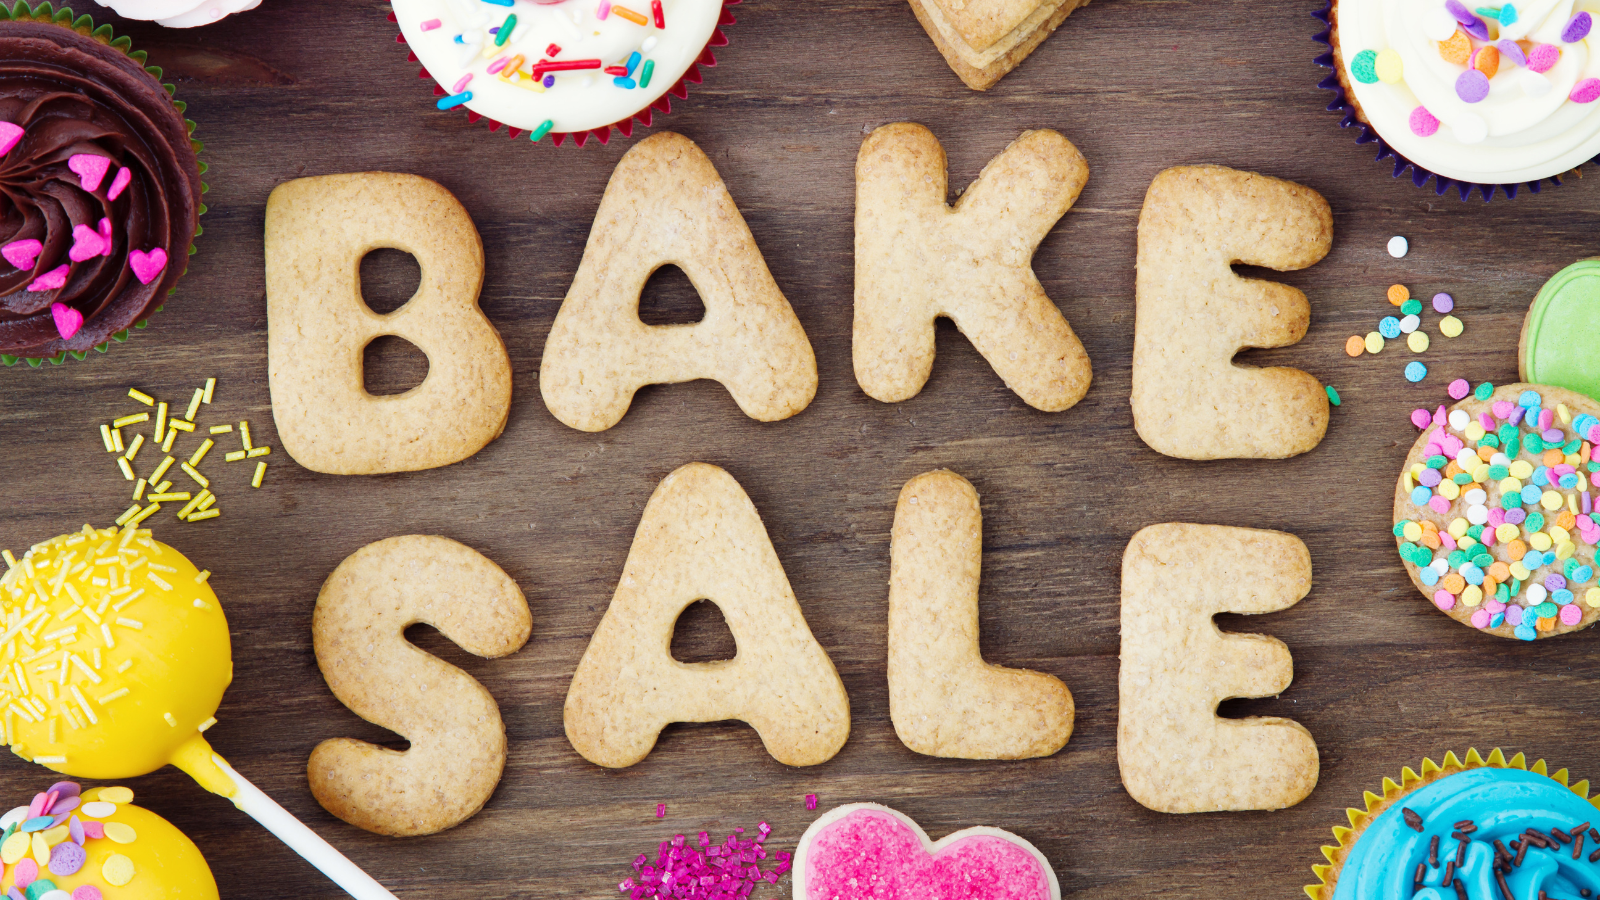 Bake Sales & Non-Profit Organizations